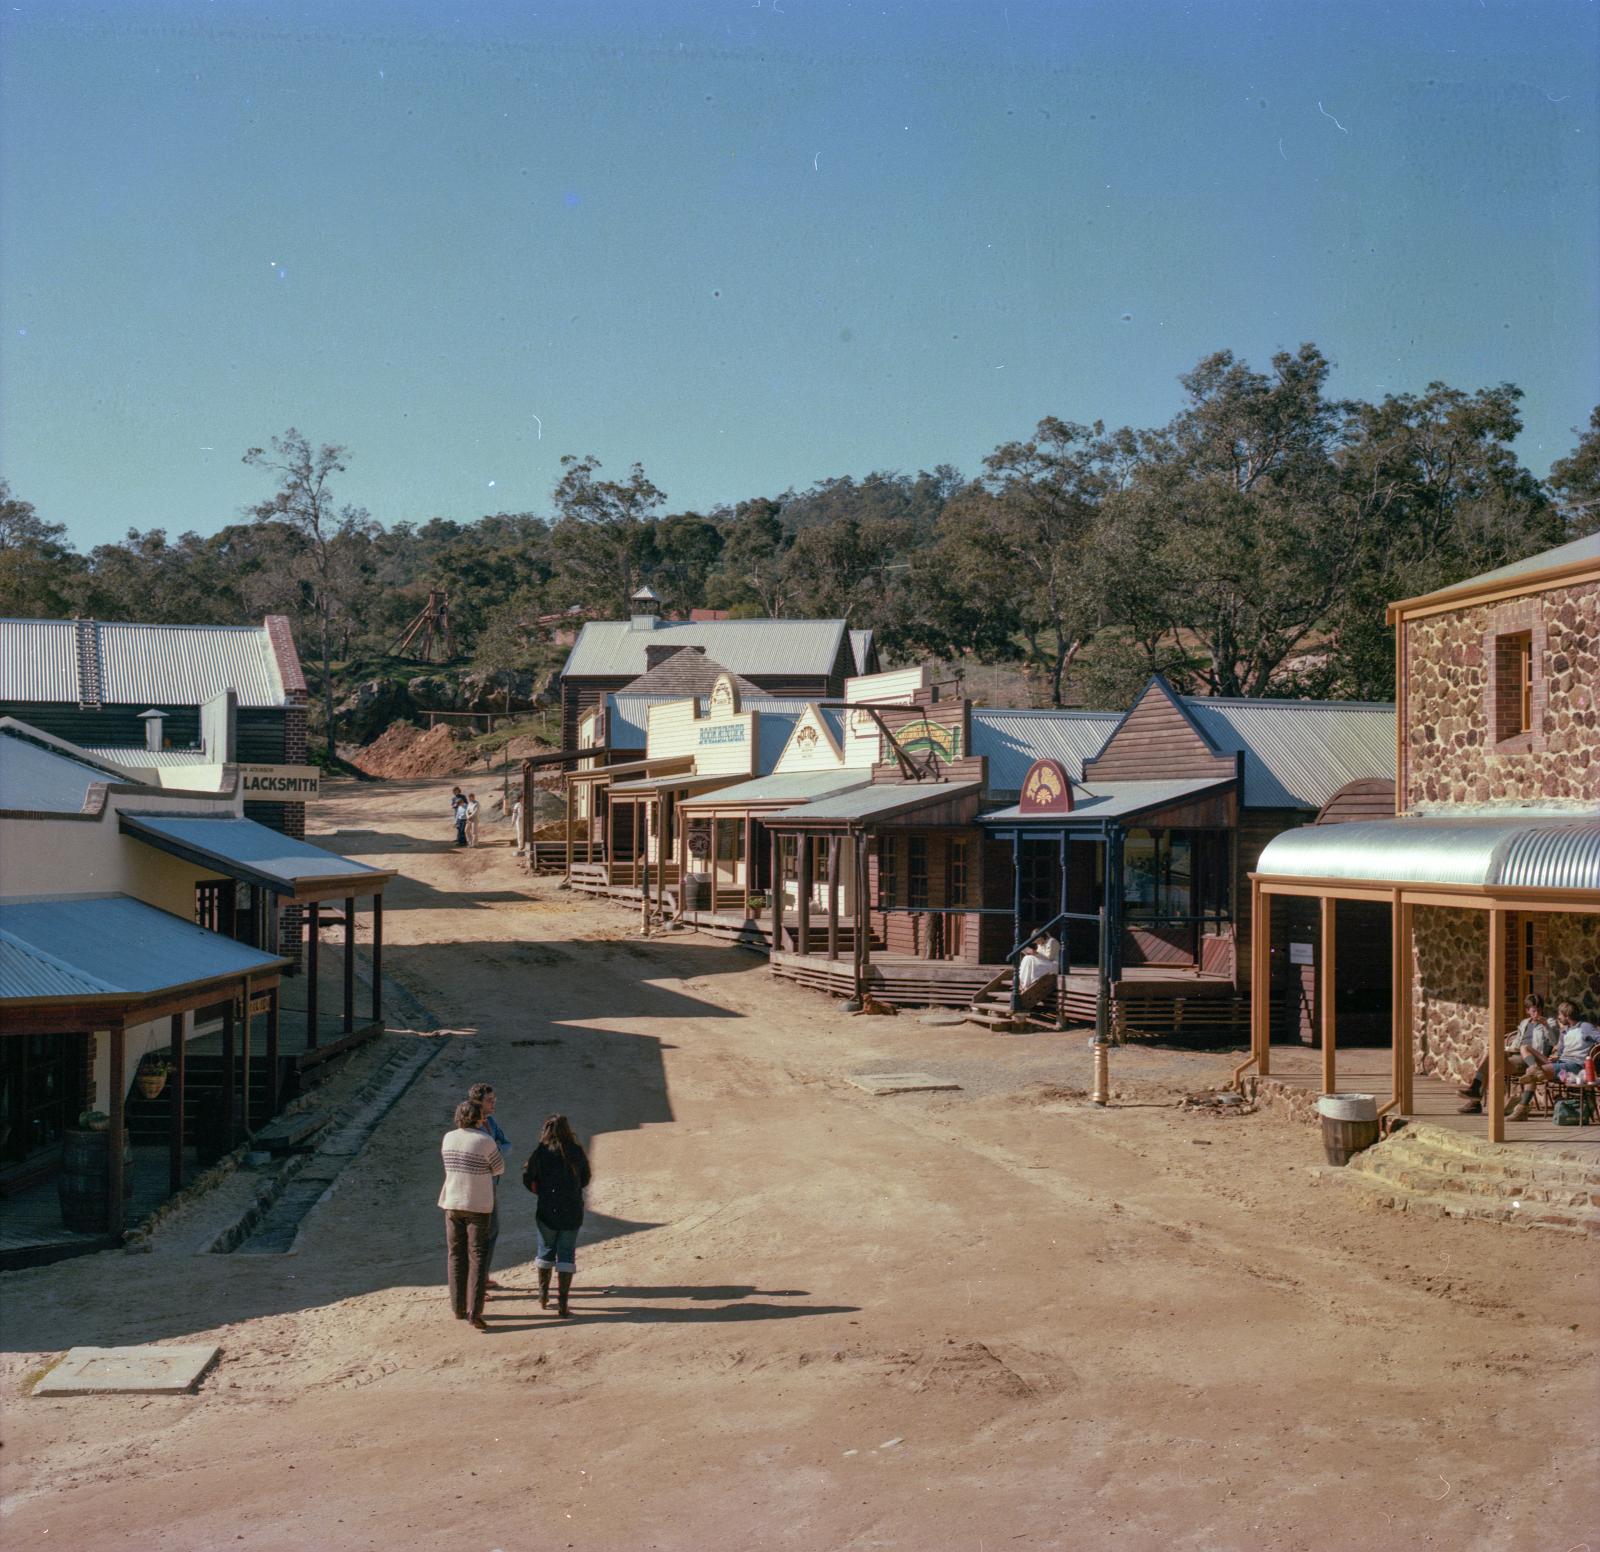 Street of Pioneer Village prior to opening.